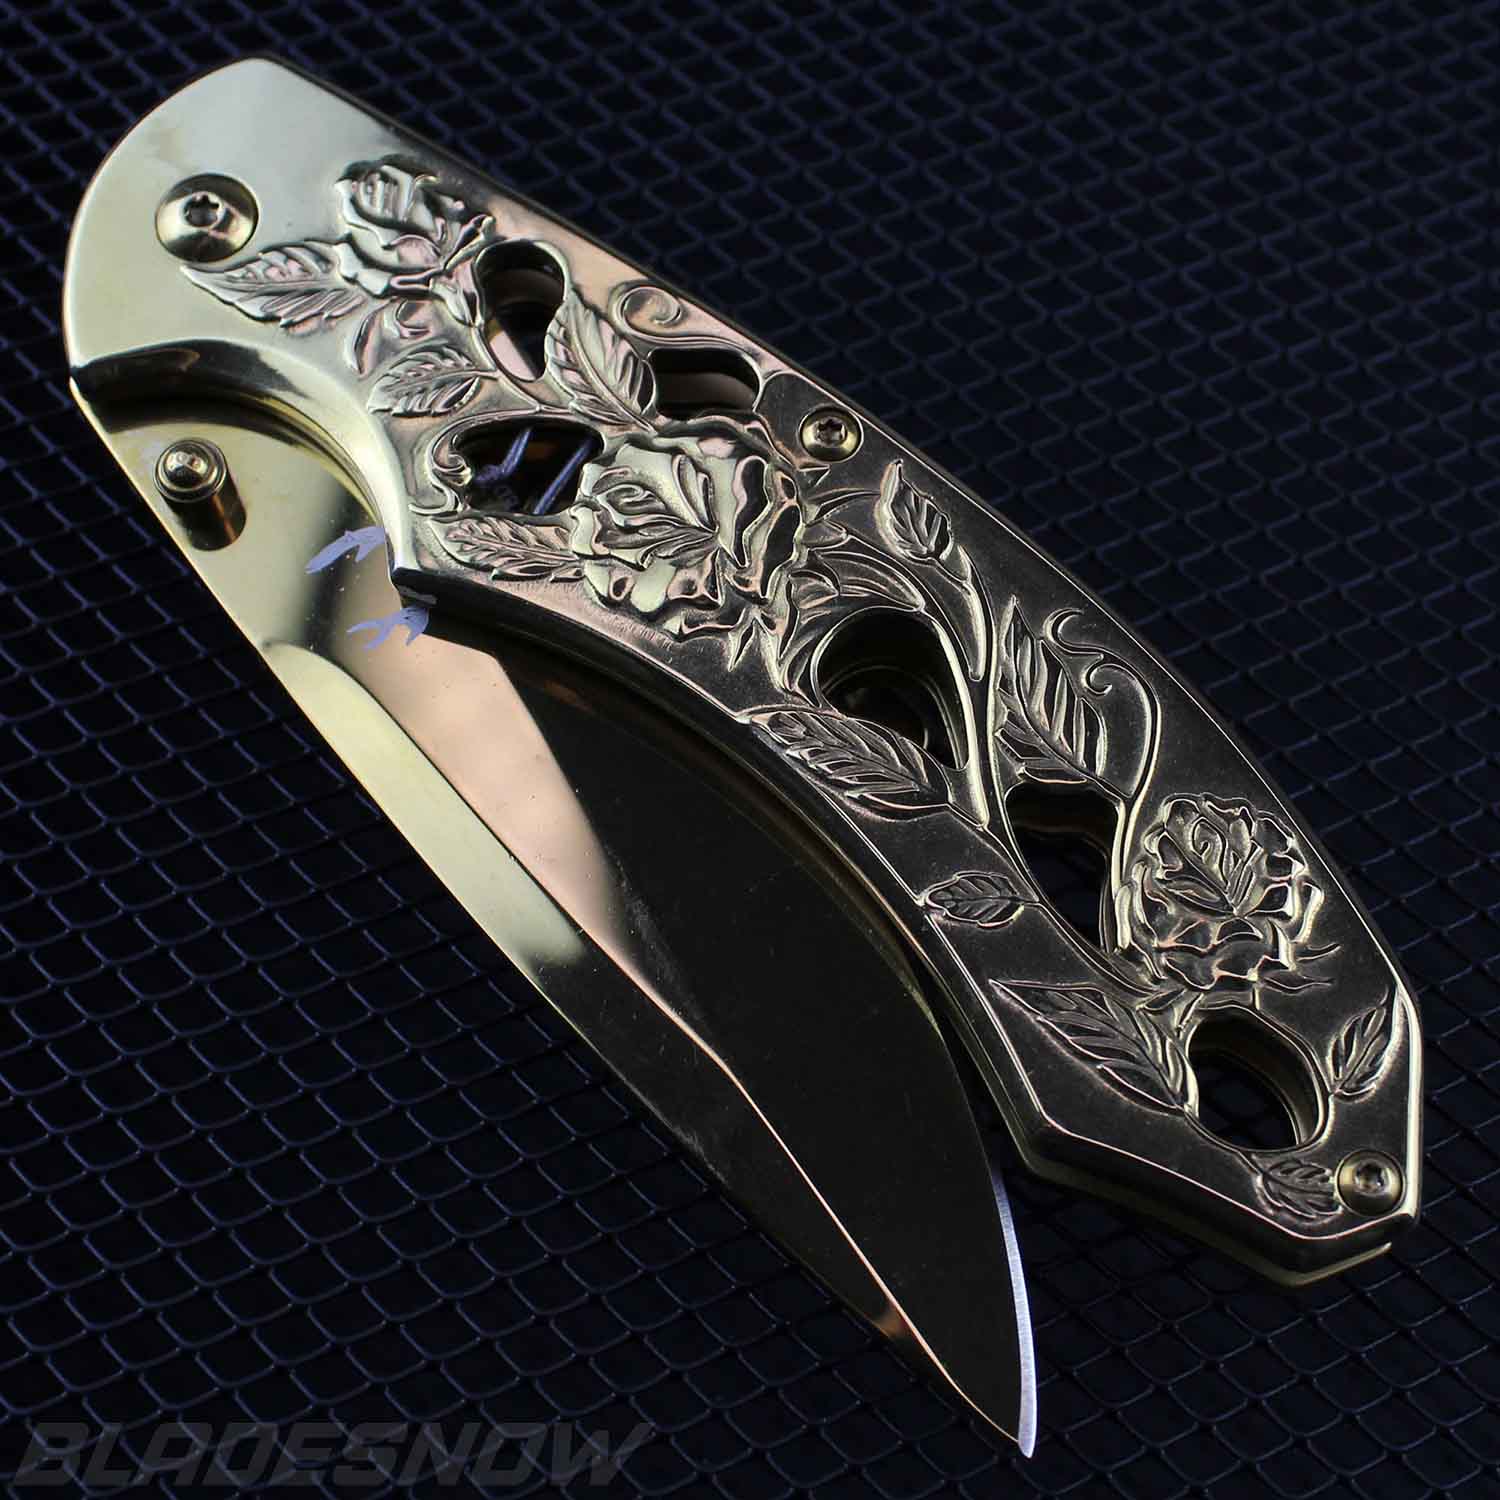 super sharp Gold Titanium Ornate  Pocket Knife foldable